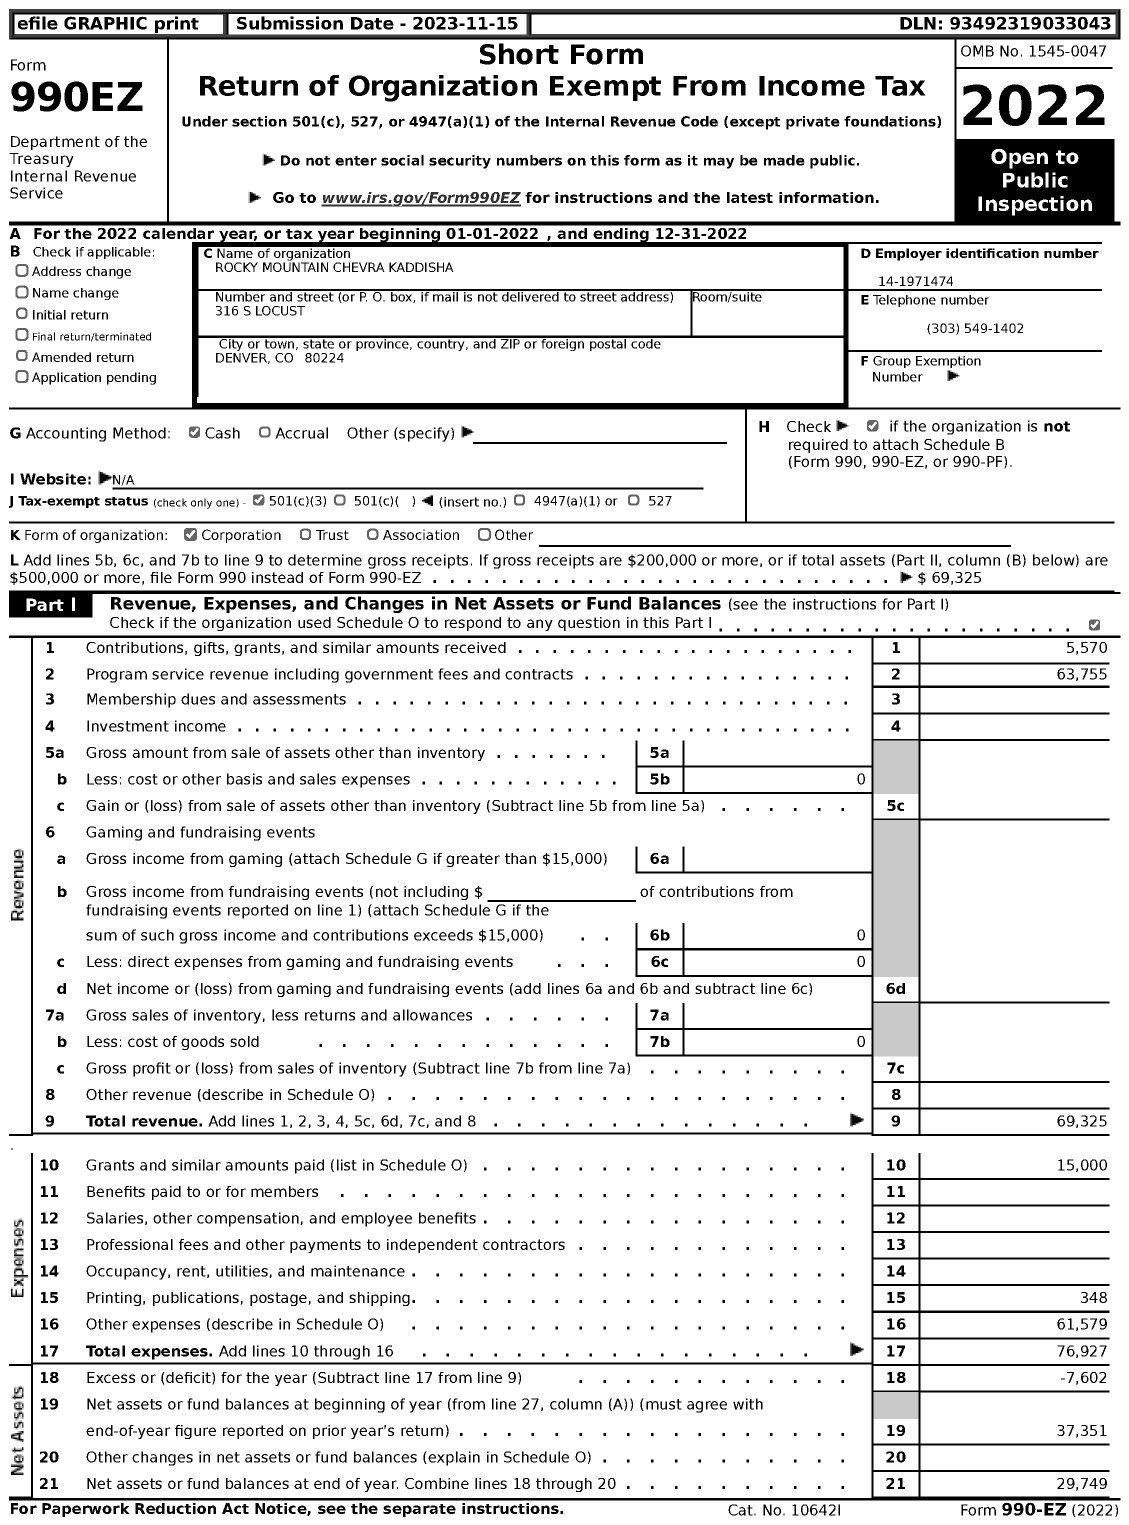 Image of first page of 2022 Form 990EZ for Rocky Mountain Chevra Kaddisha